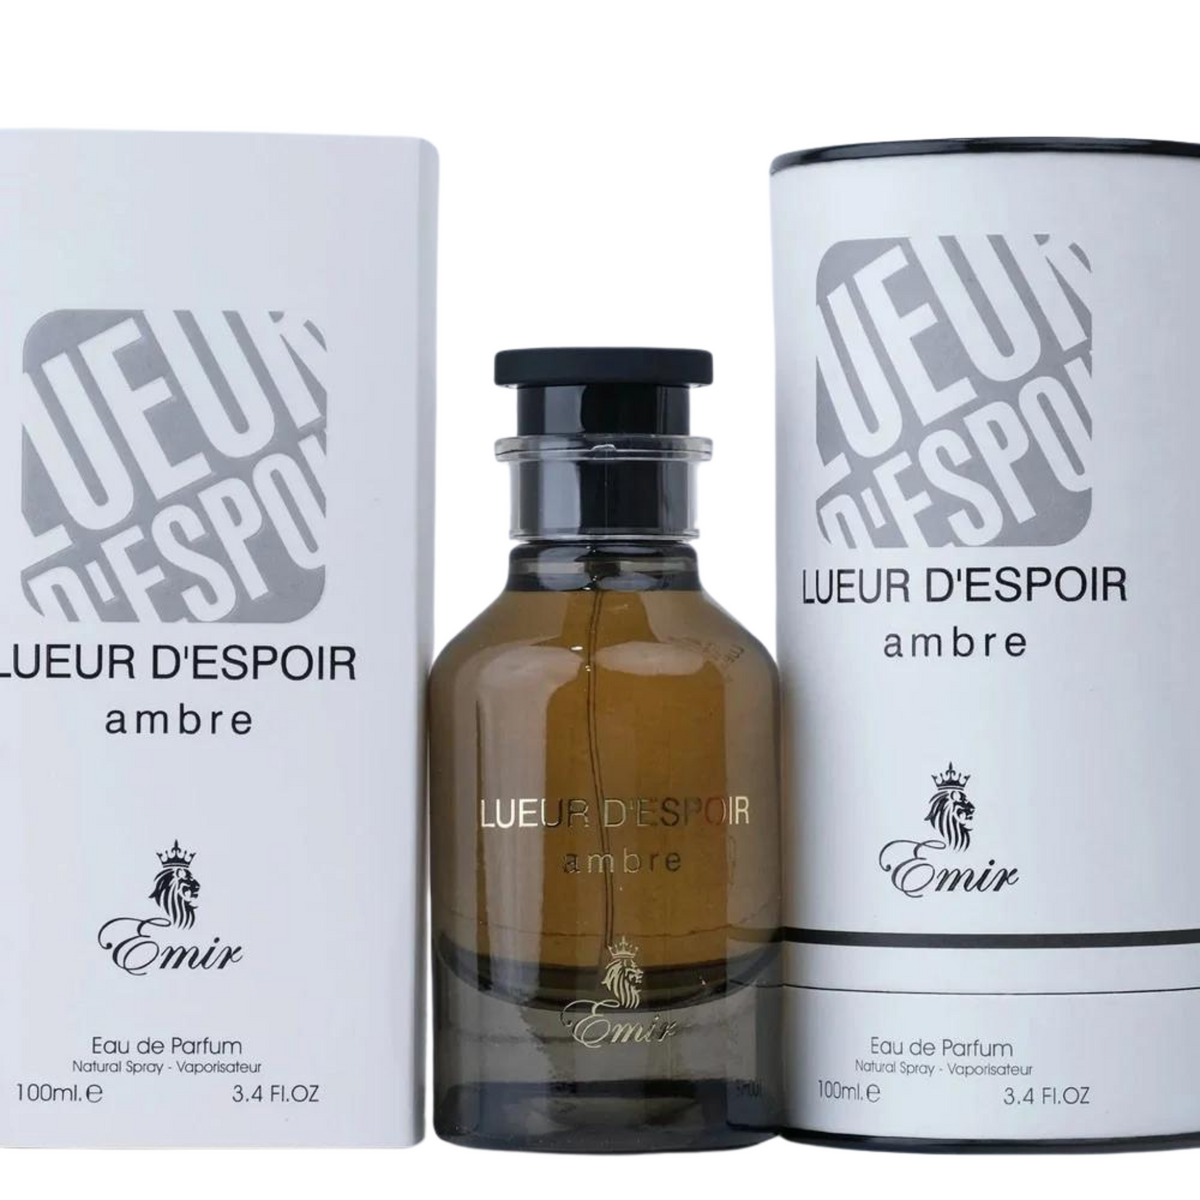 Emir Lueur D'espoir Arena unisex Perfume 100ml By Pendora Scent